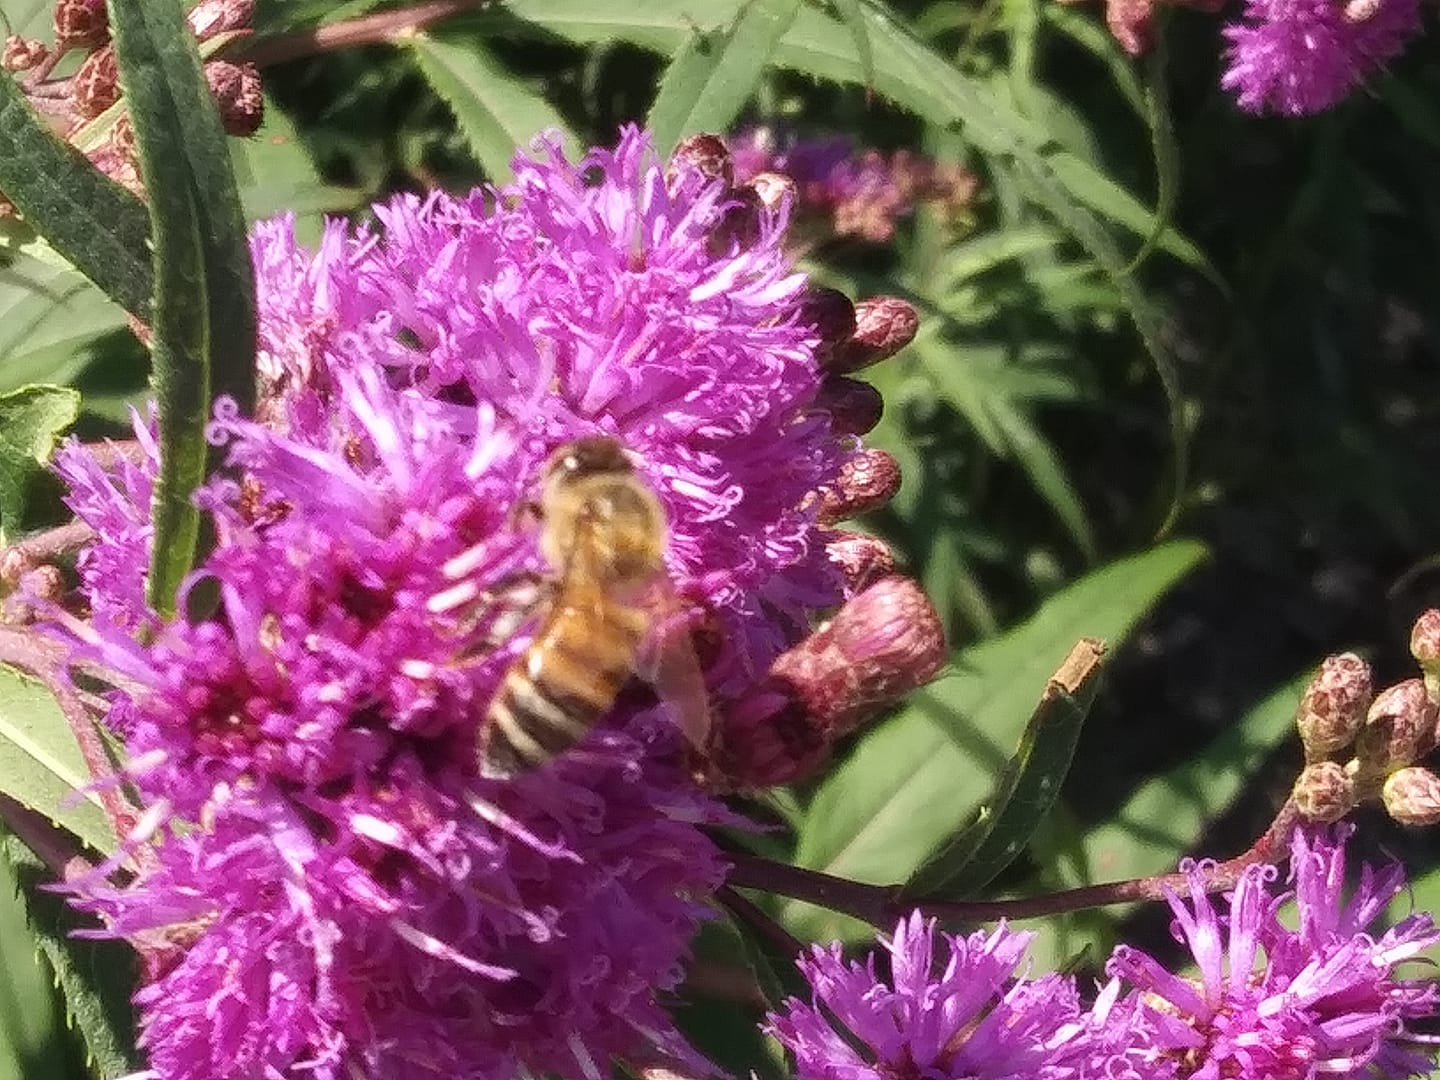 Honeybee On and Amidst Purple Flowers